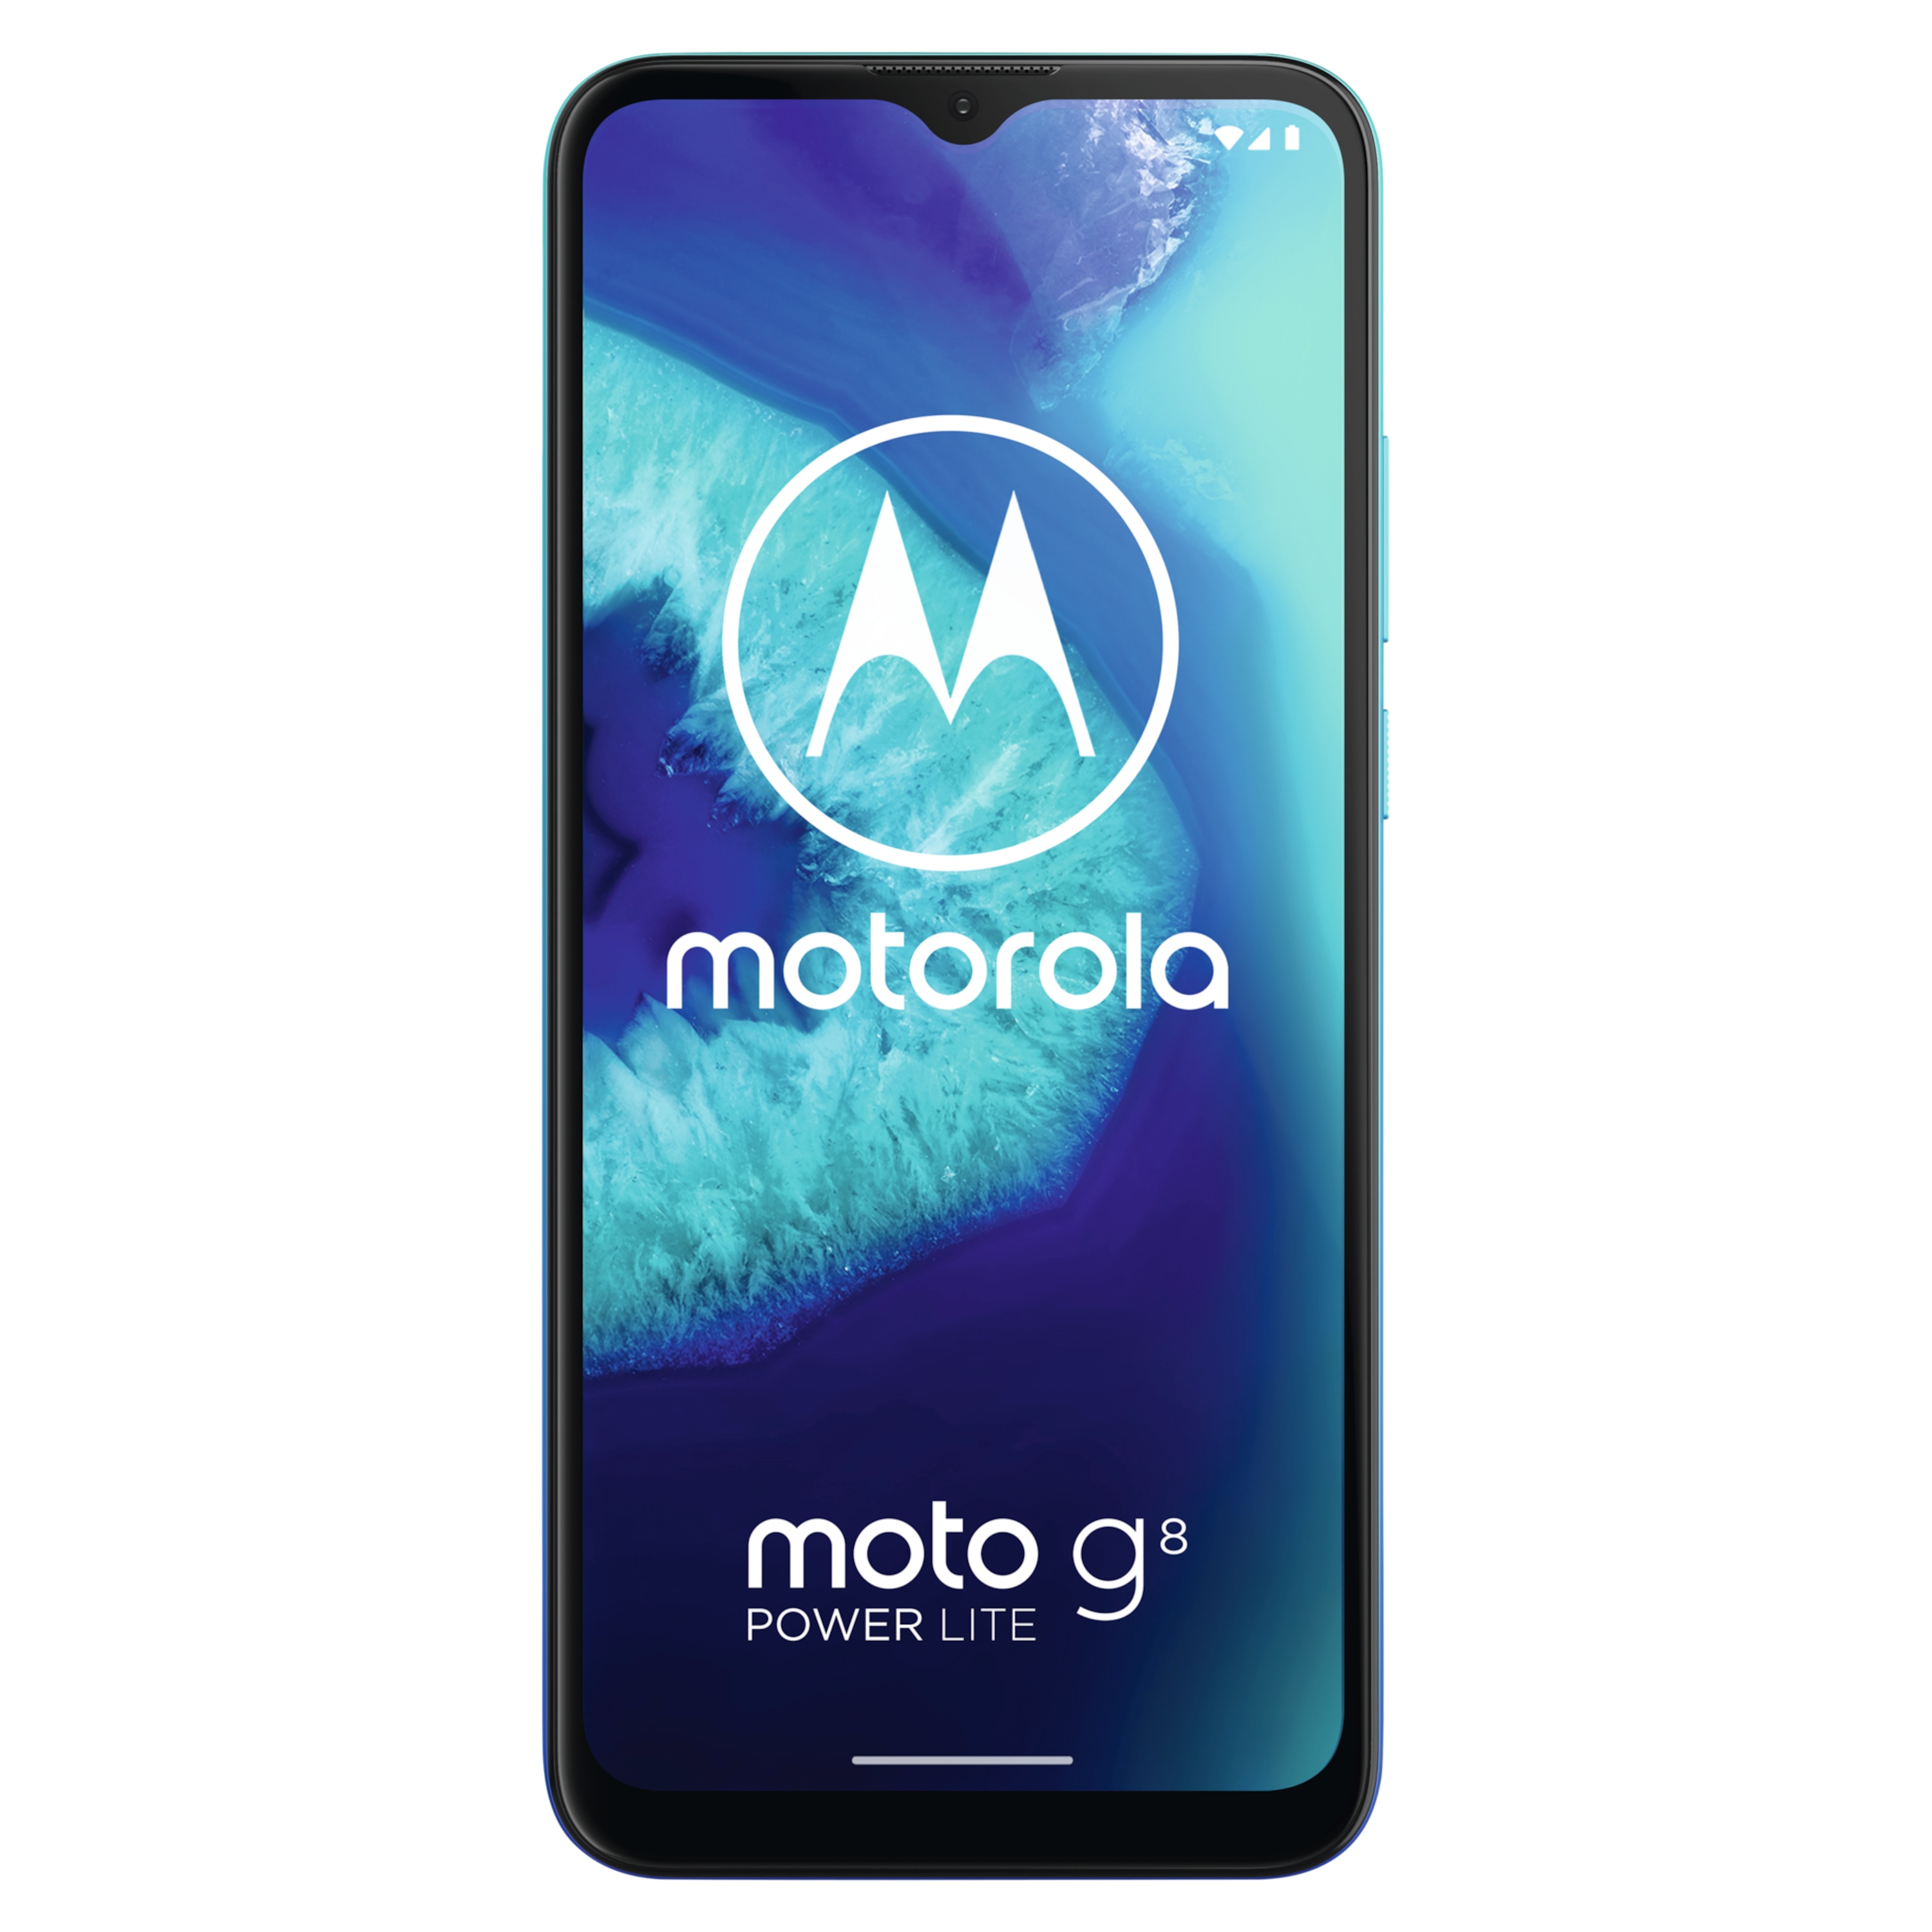 MOTOROLA moto g8 power lite Smartphone, 16,51 cm (6,5") HD+ Display, Android™ 10, 64 GB Speicher, Octa- Core-Prozessor, Dual-SIM, Bluetooth® 4.2